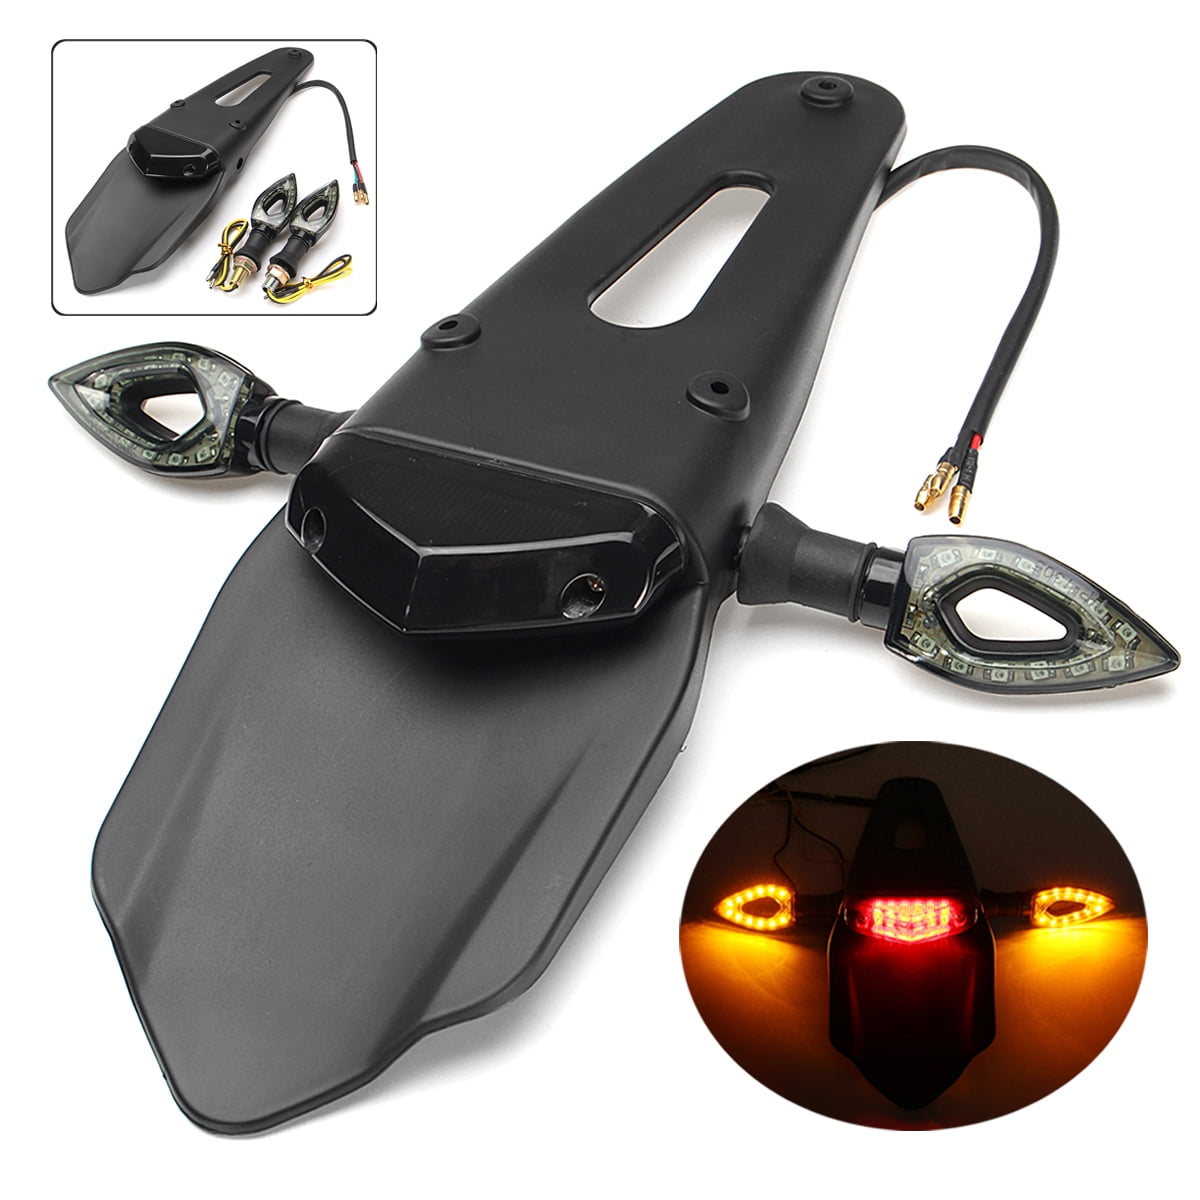 Universal Motorcycle LED Rear Fender Brake Tail Light Turn Signal Lamp Off-road 